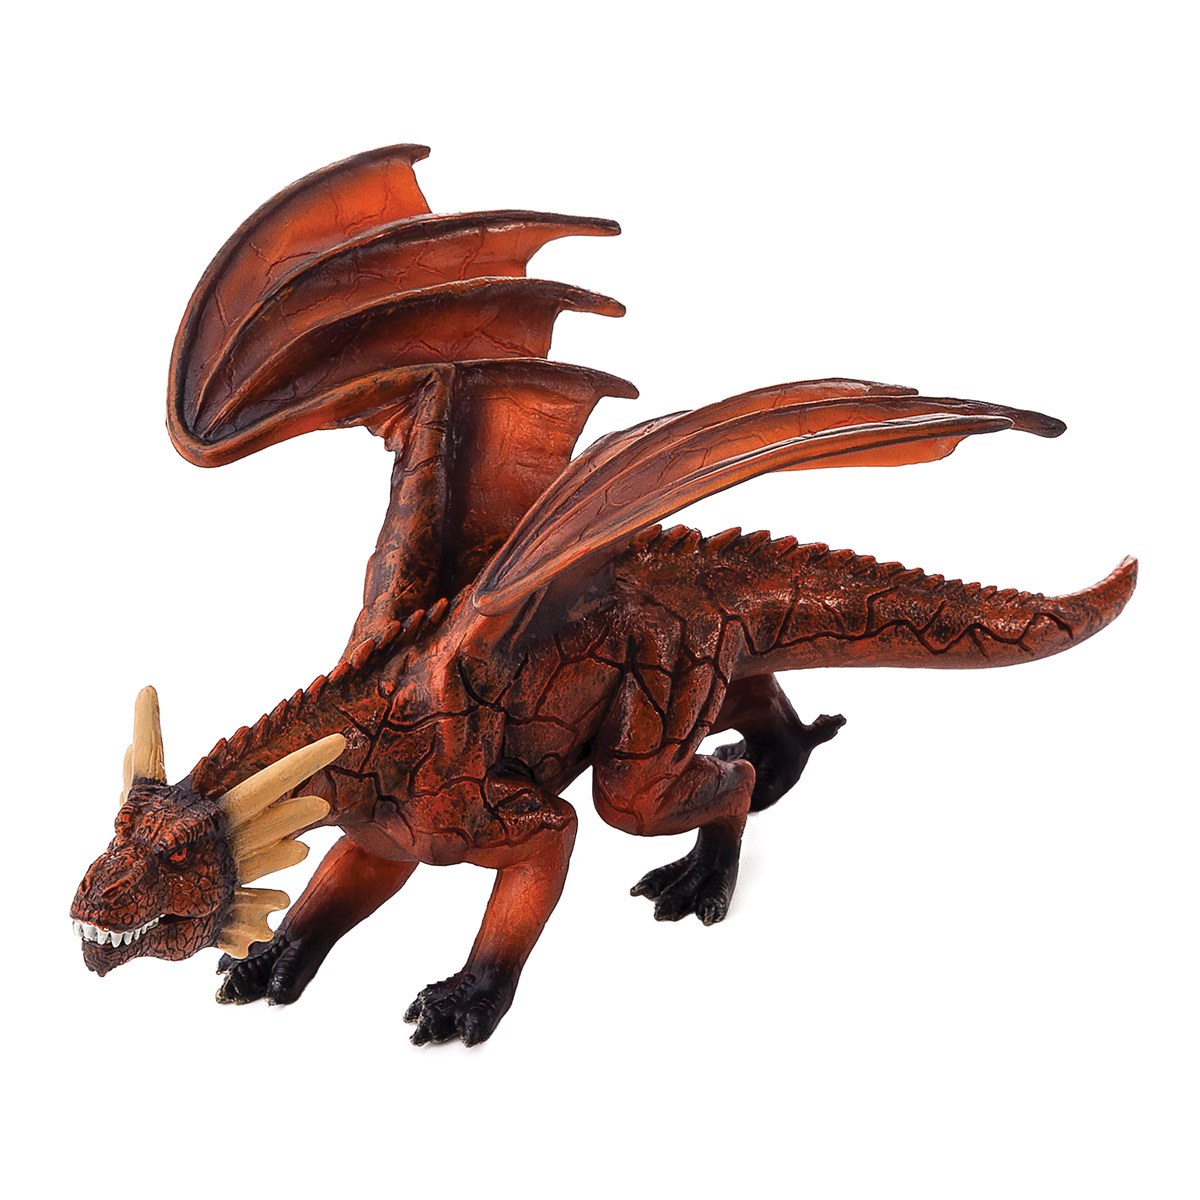 Mojo Fire Dragon Fantasy Figure